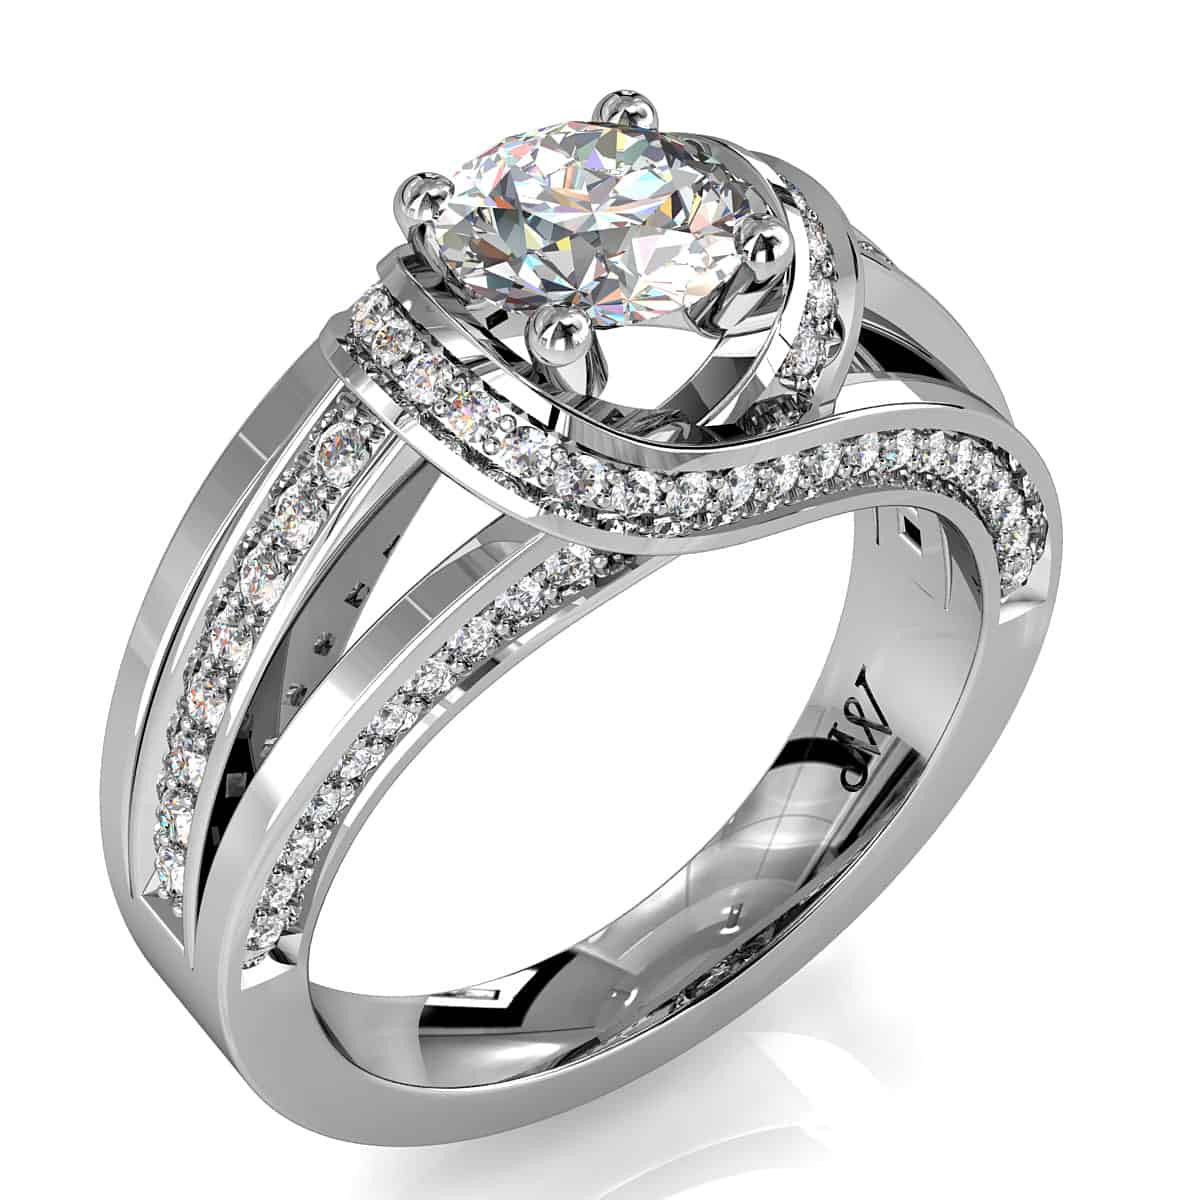 Round Diamond Solitaire Engagement Ring
 Round Brilliant Cut Diamond Solitaire Engagement Ring